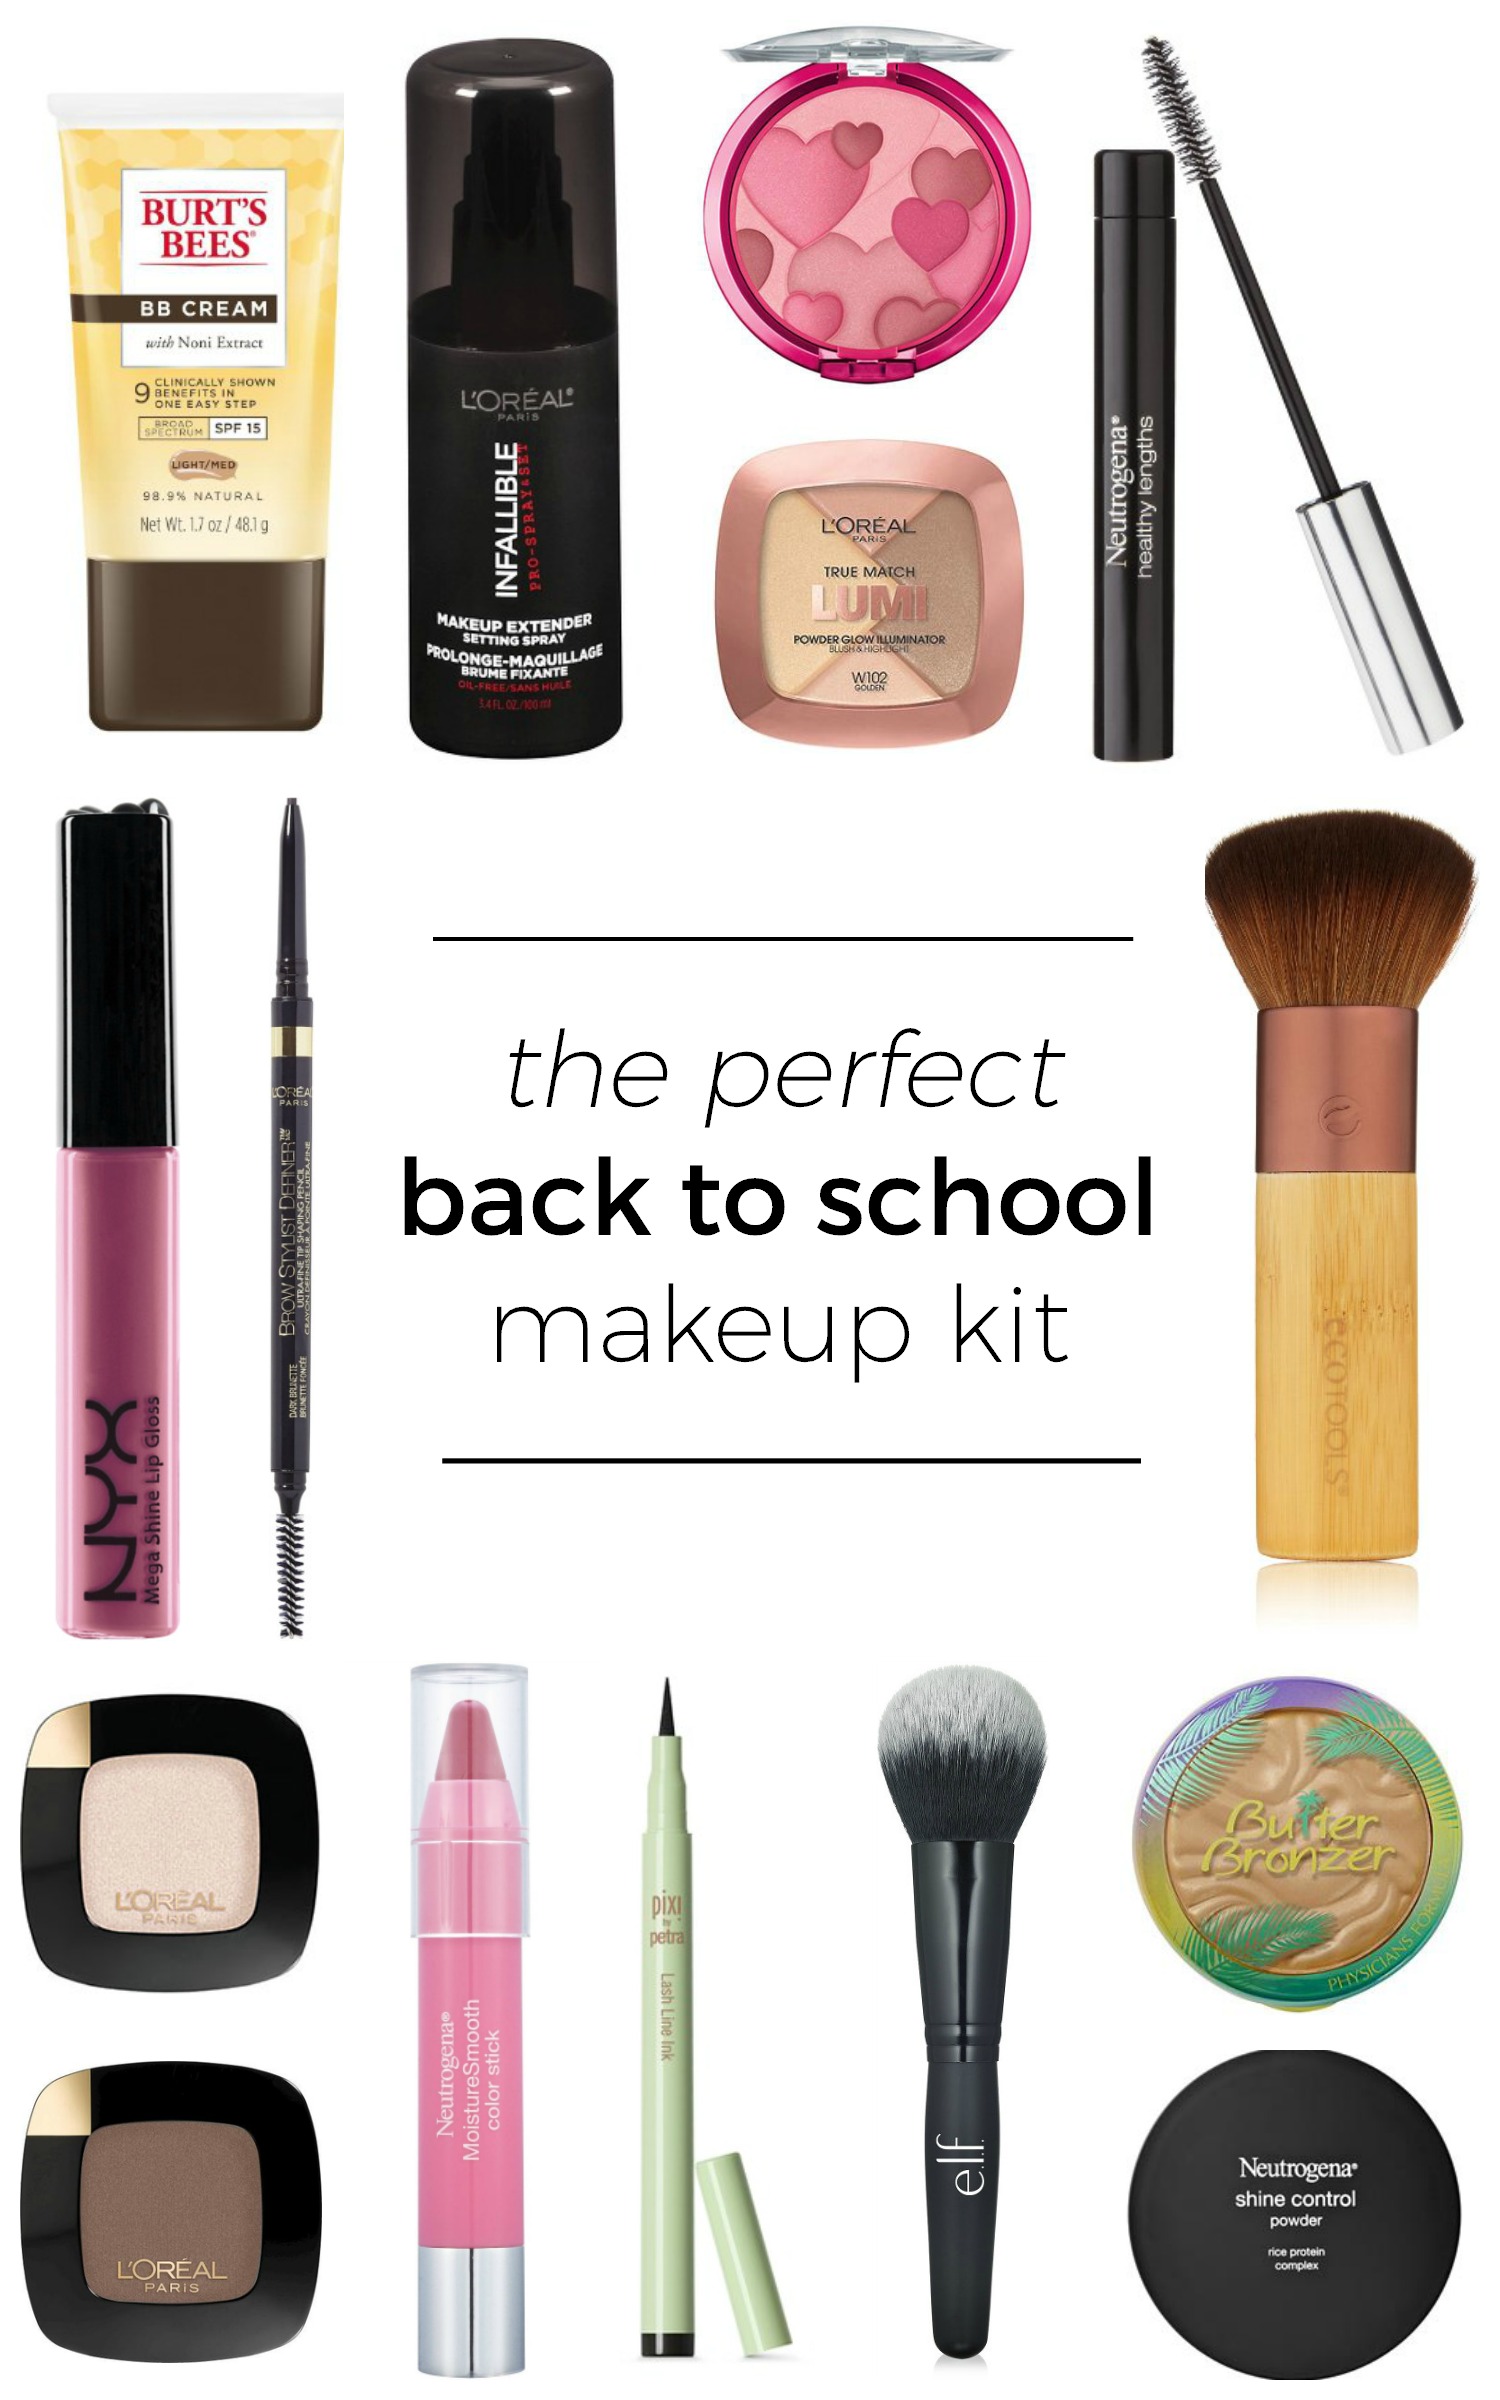 The Perfect Back to School Makeup Kit | Ashley Brooke Nicholas